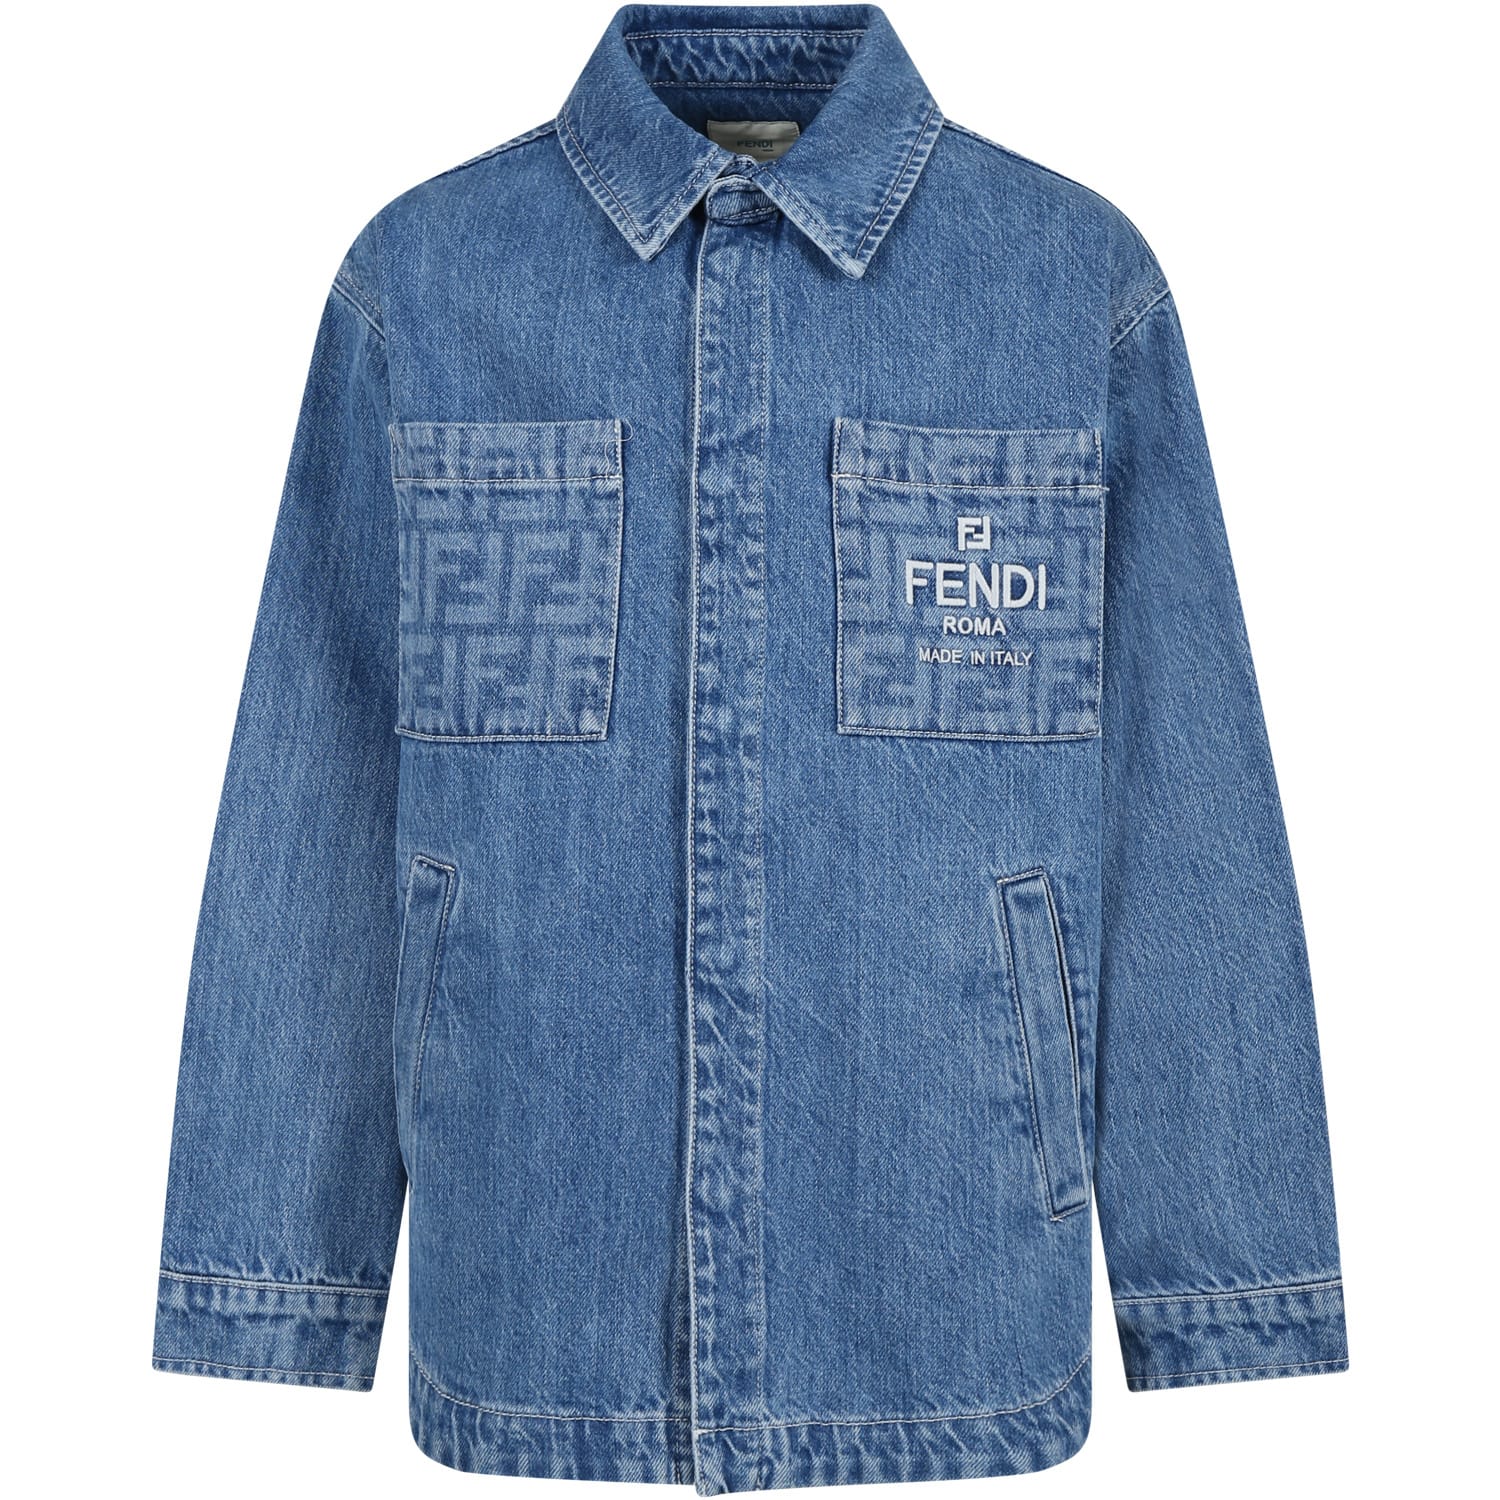 Fendi Denim Jacket For Kids With Iconic Ff Pockets